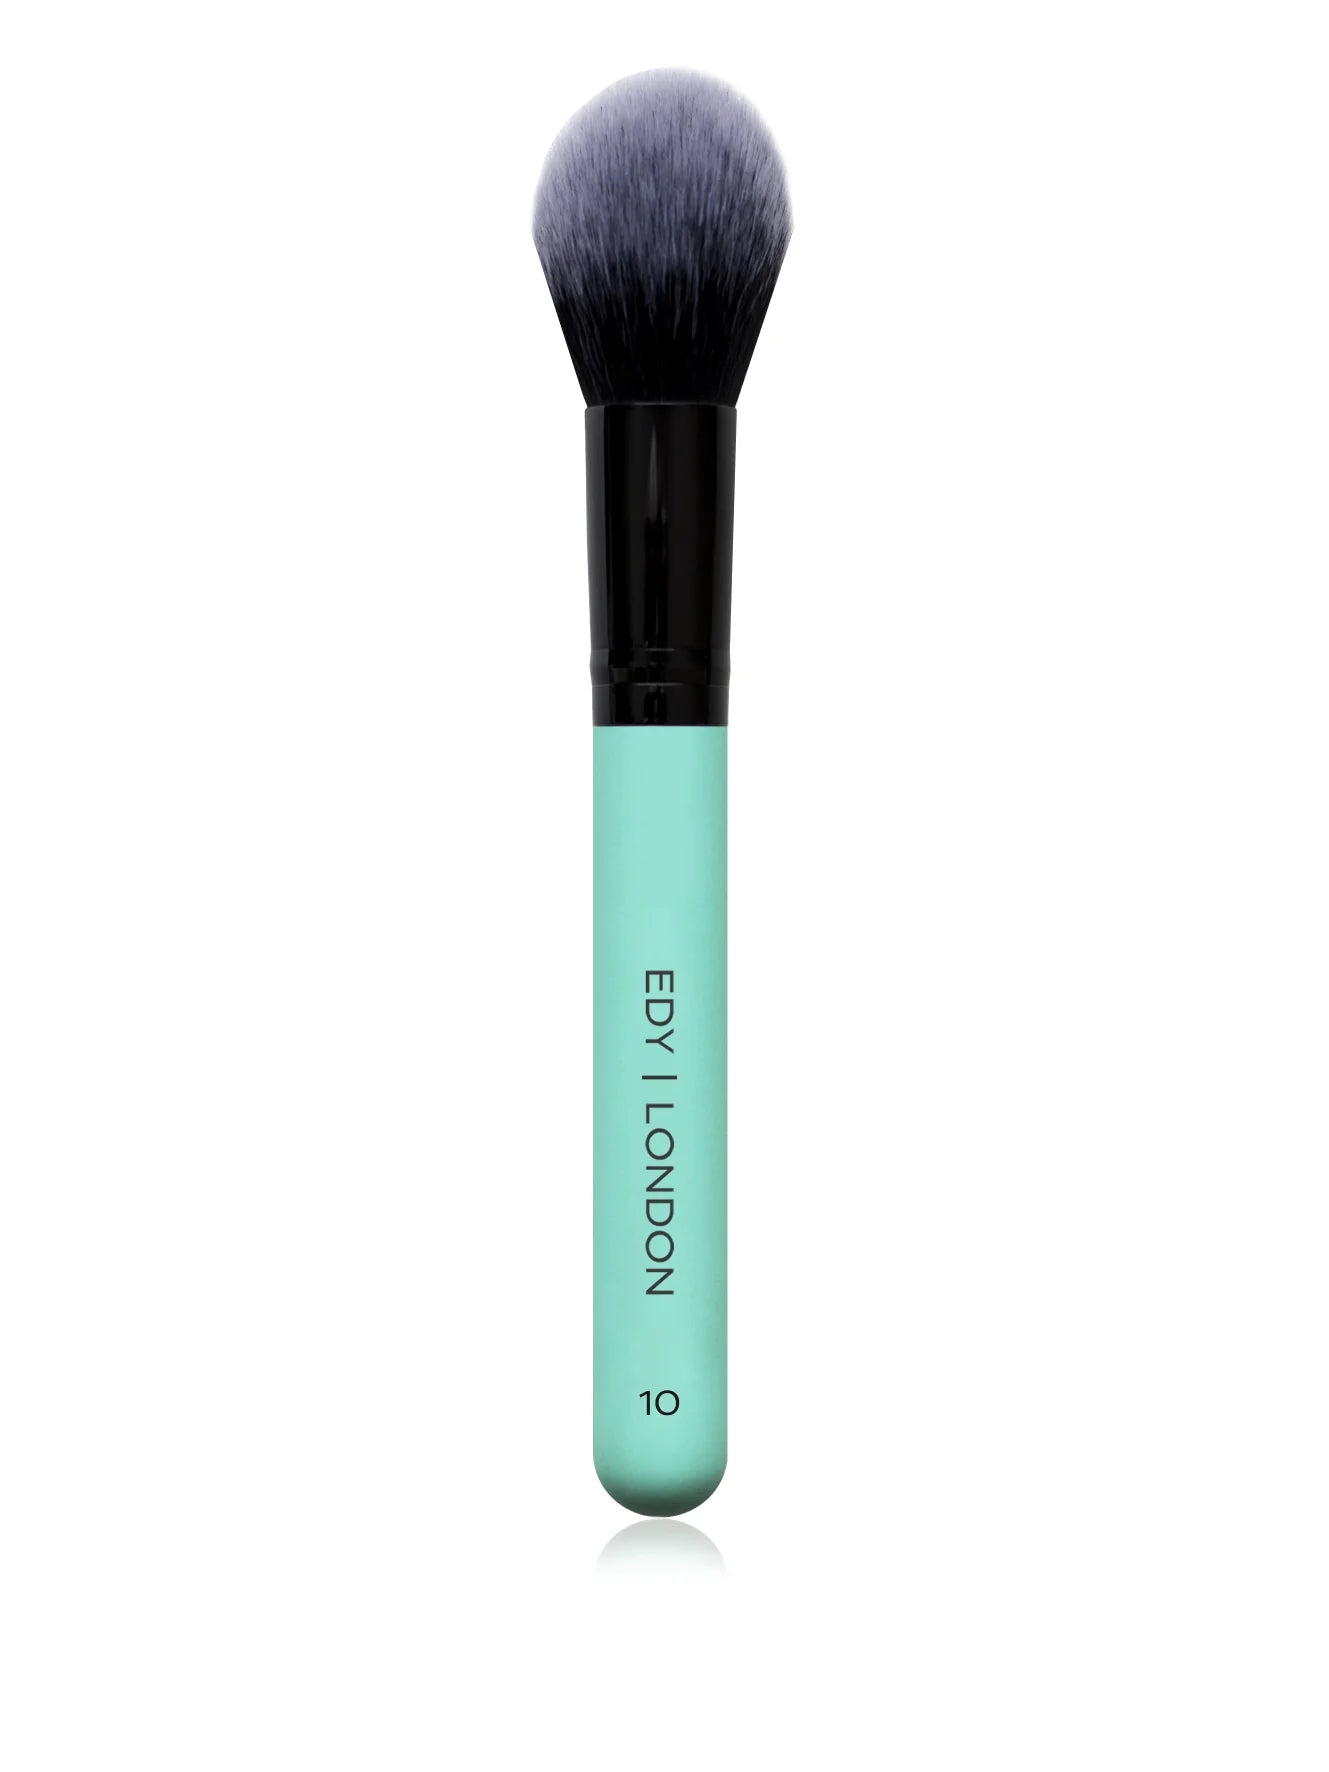 Tapered Face Brush 10 Make-up Brush EDY LONDON Turquoise   - EDY LONDON PRODUCTS UK - The Best Makeup Brushes - shop.edy.london